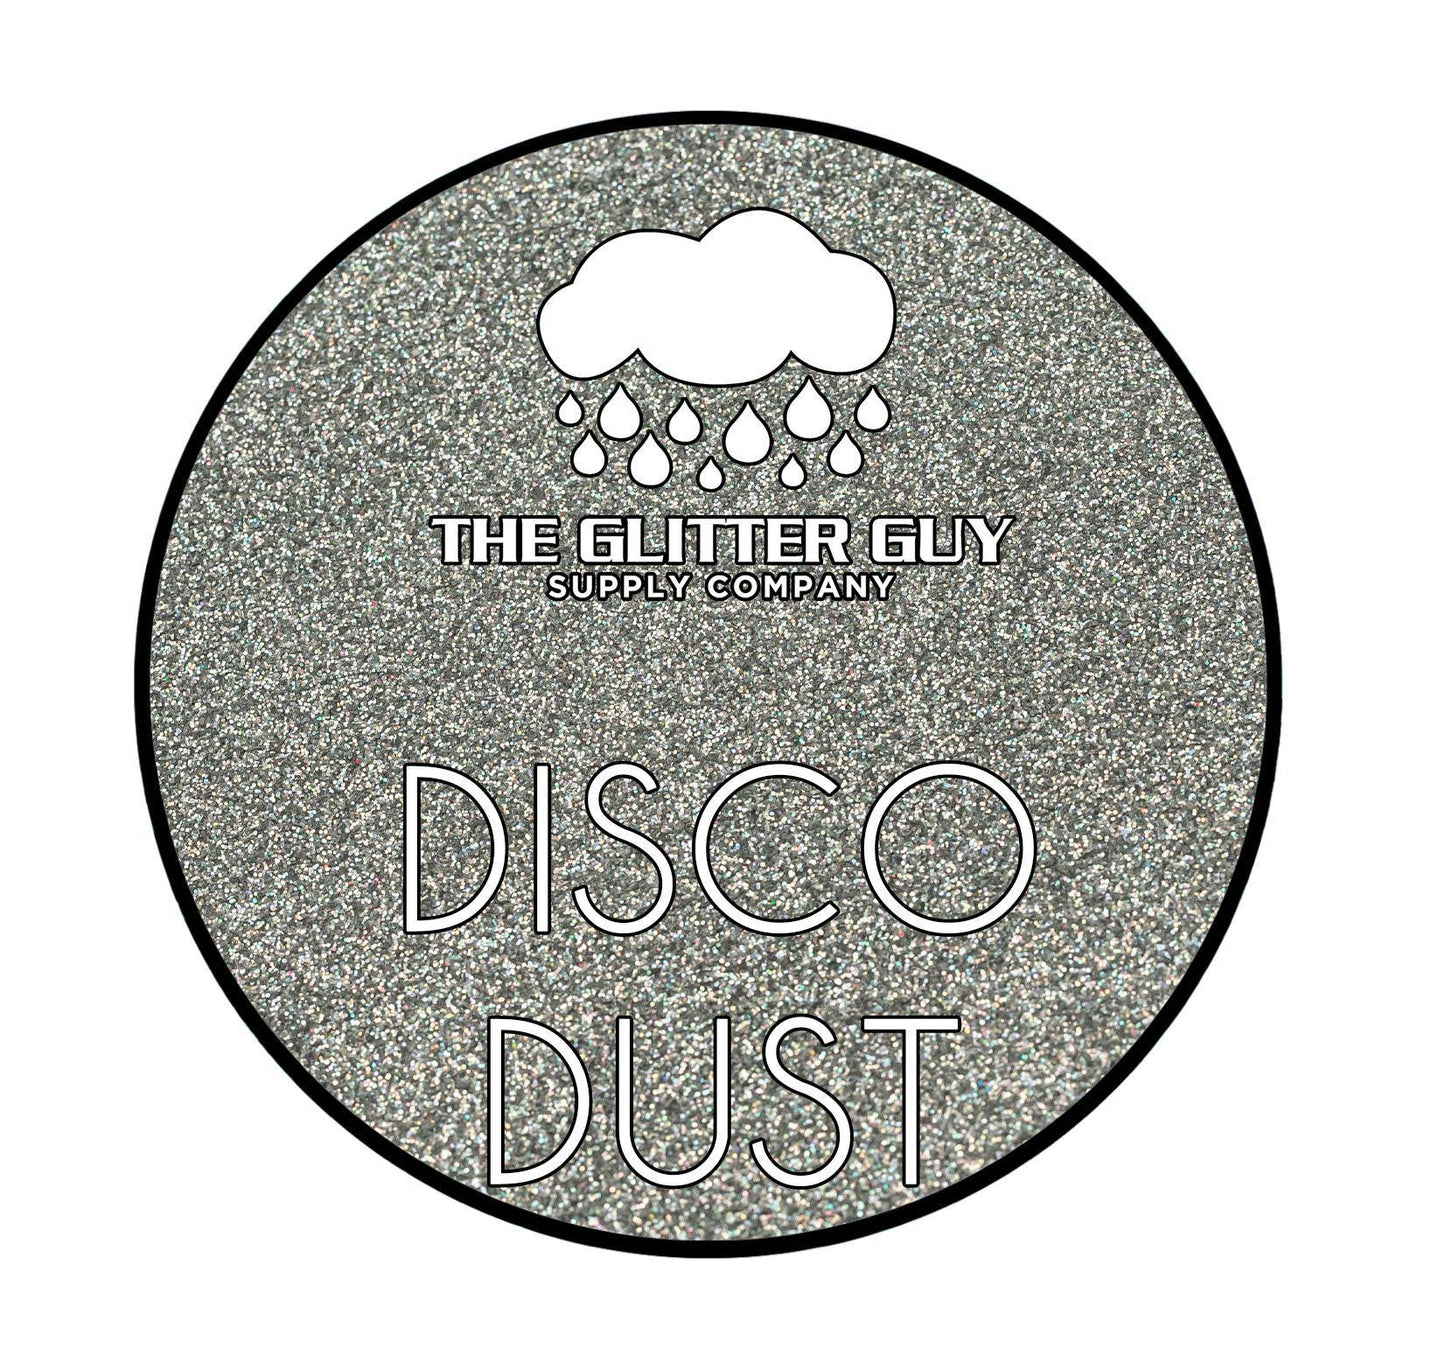 Disco Dust Glitter